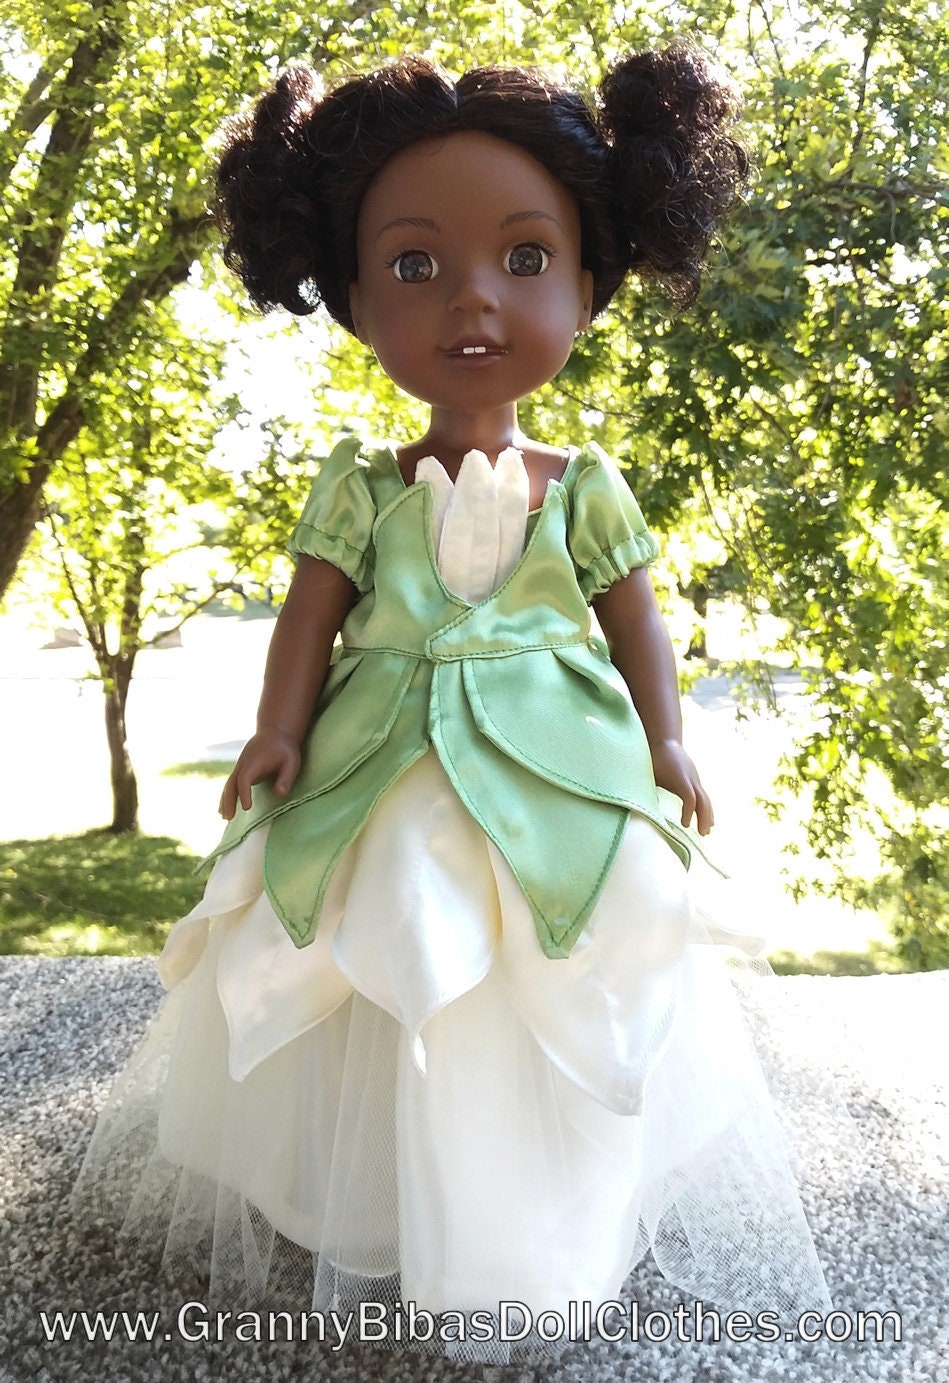 Disney Store Tiana Animator Toddler Stuffed Plush Doll 12 RARE